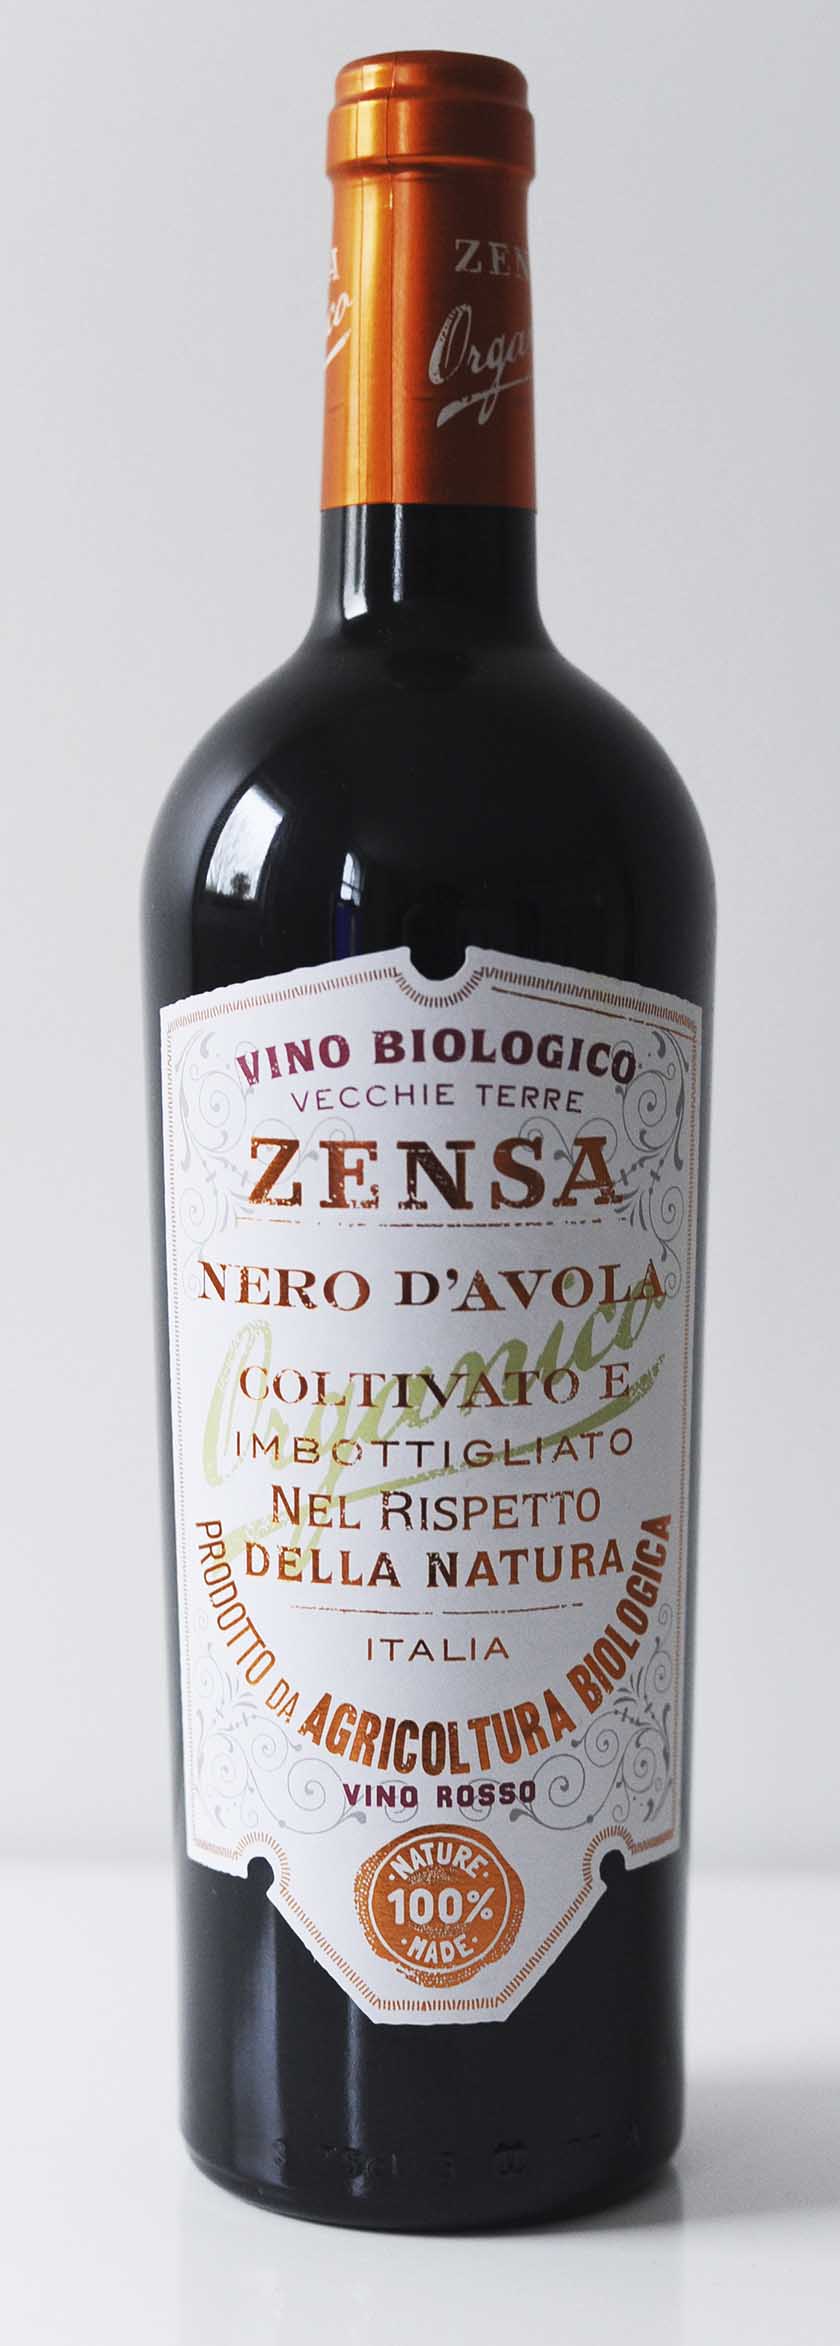 Zensa Nero d’Avola Terre Siciliane, Italy, 2013, £9.95